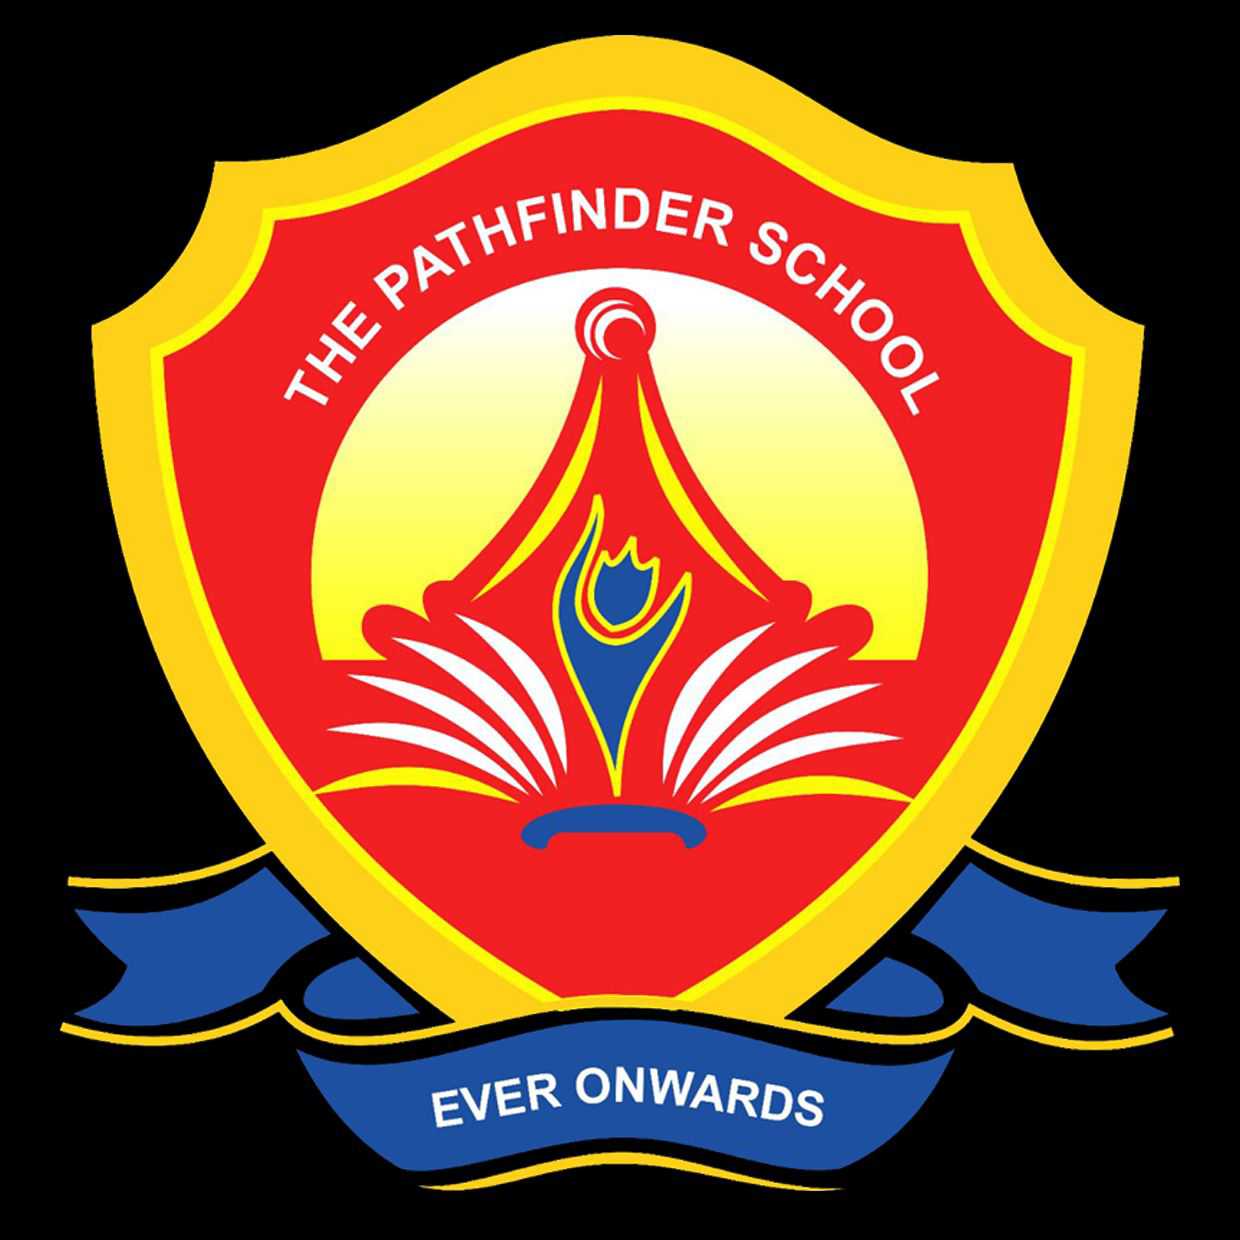 pathfinder school logo